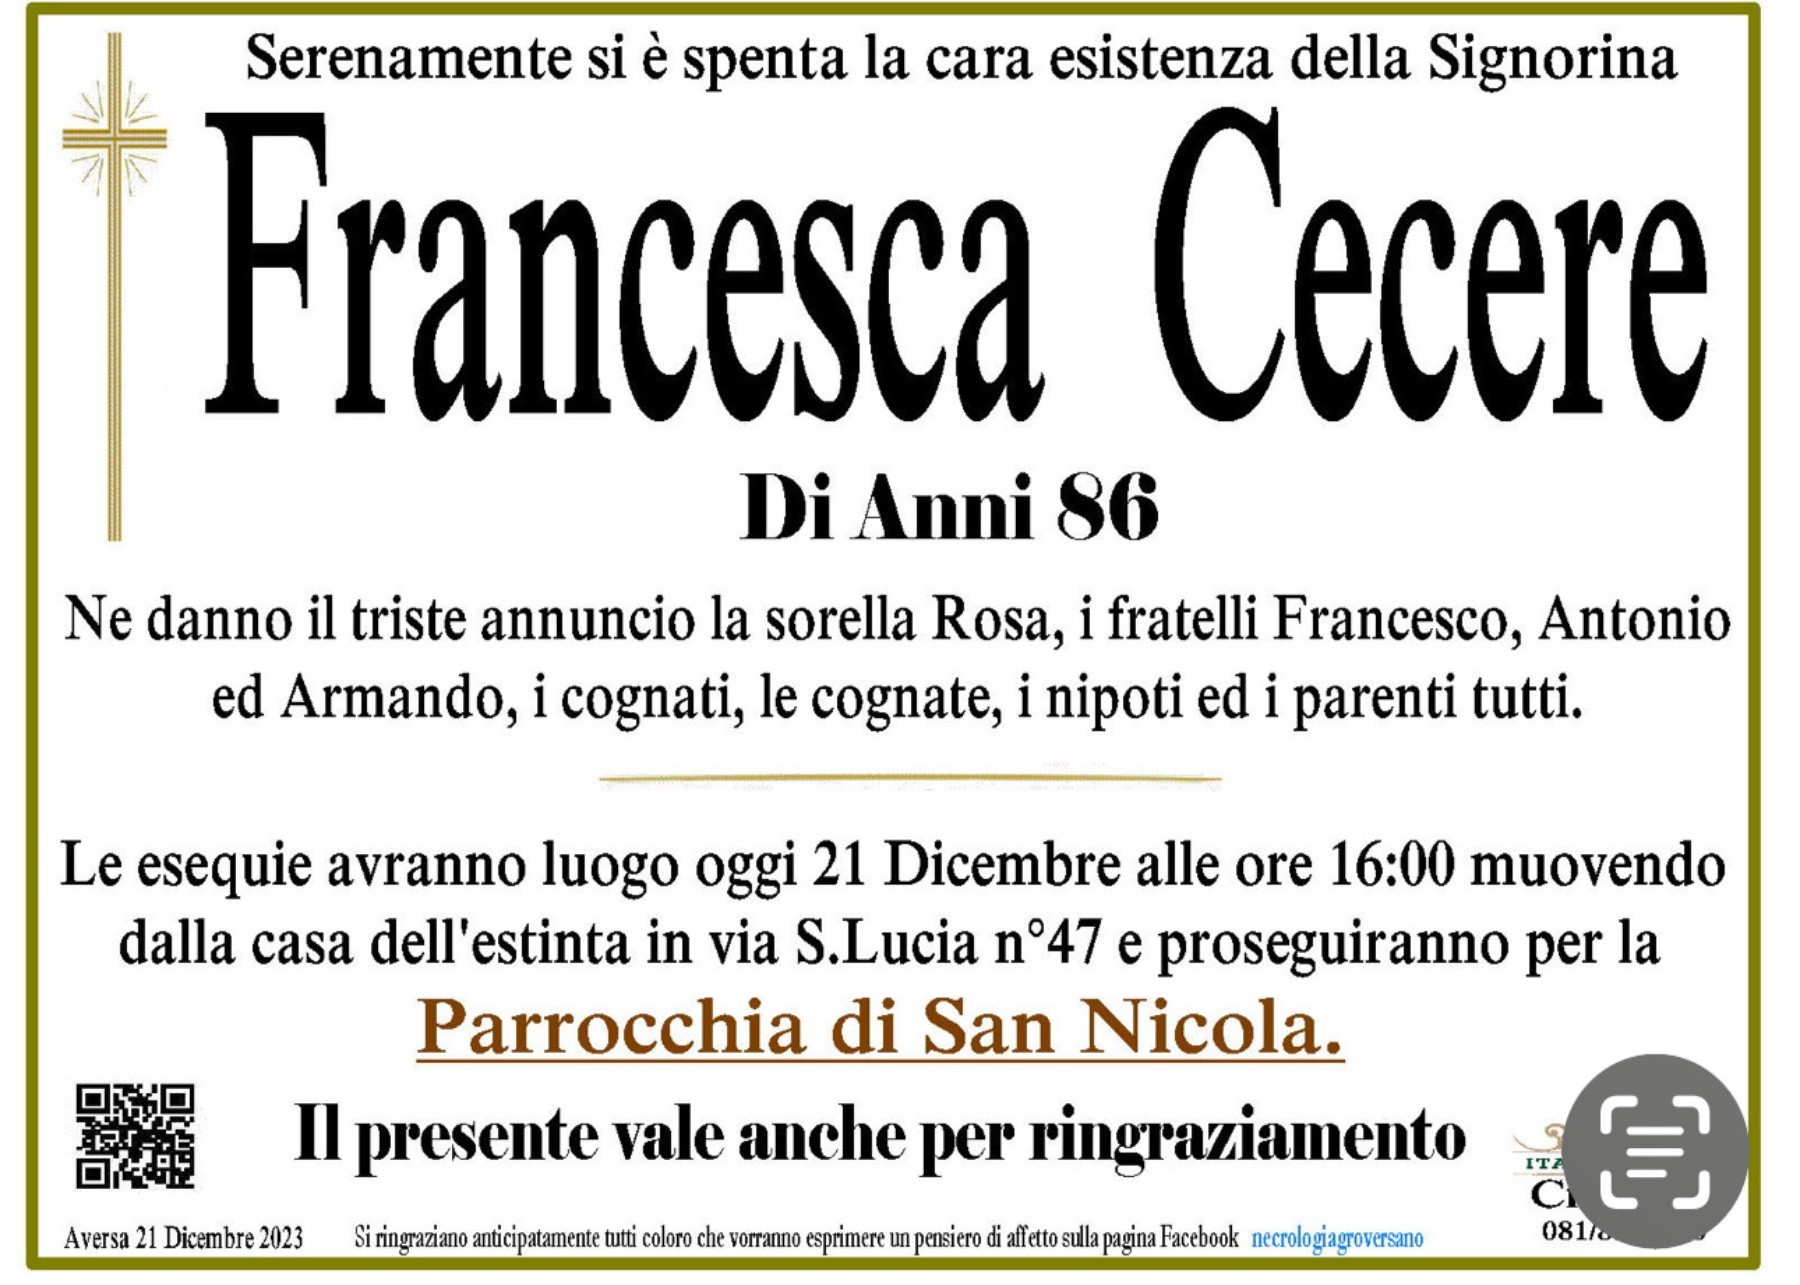 Francesca Cecere